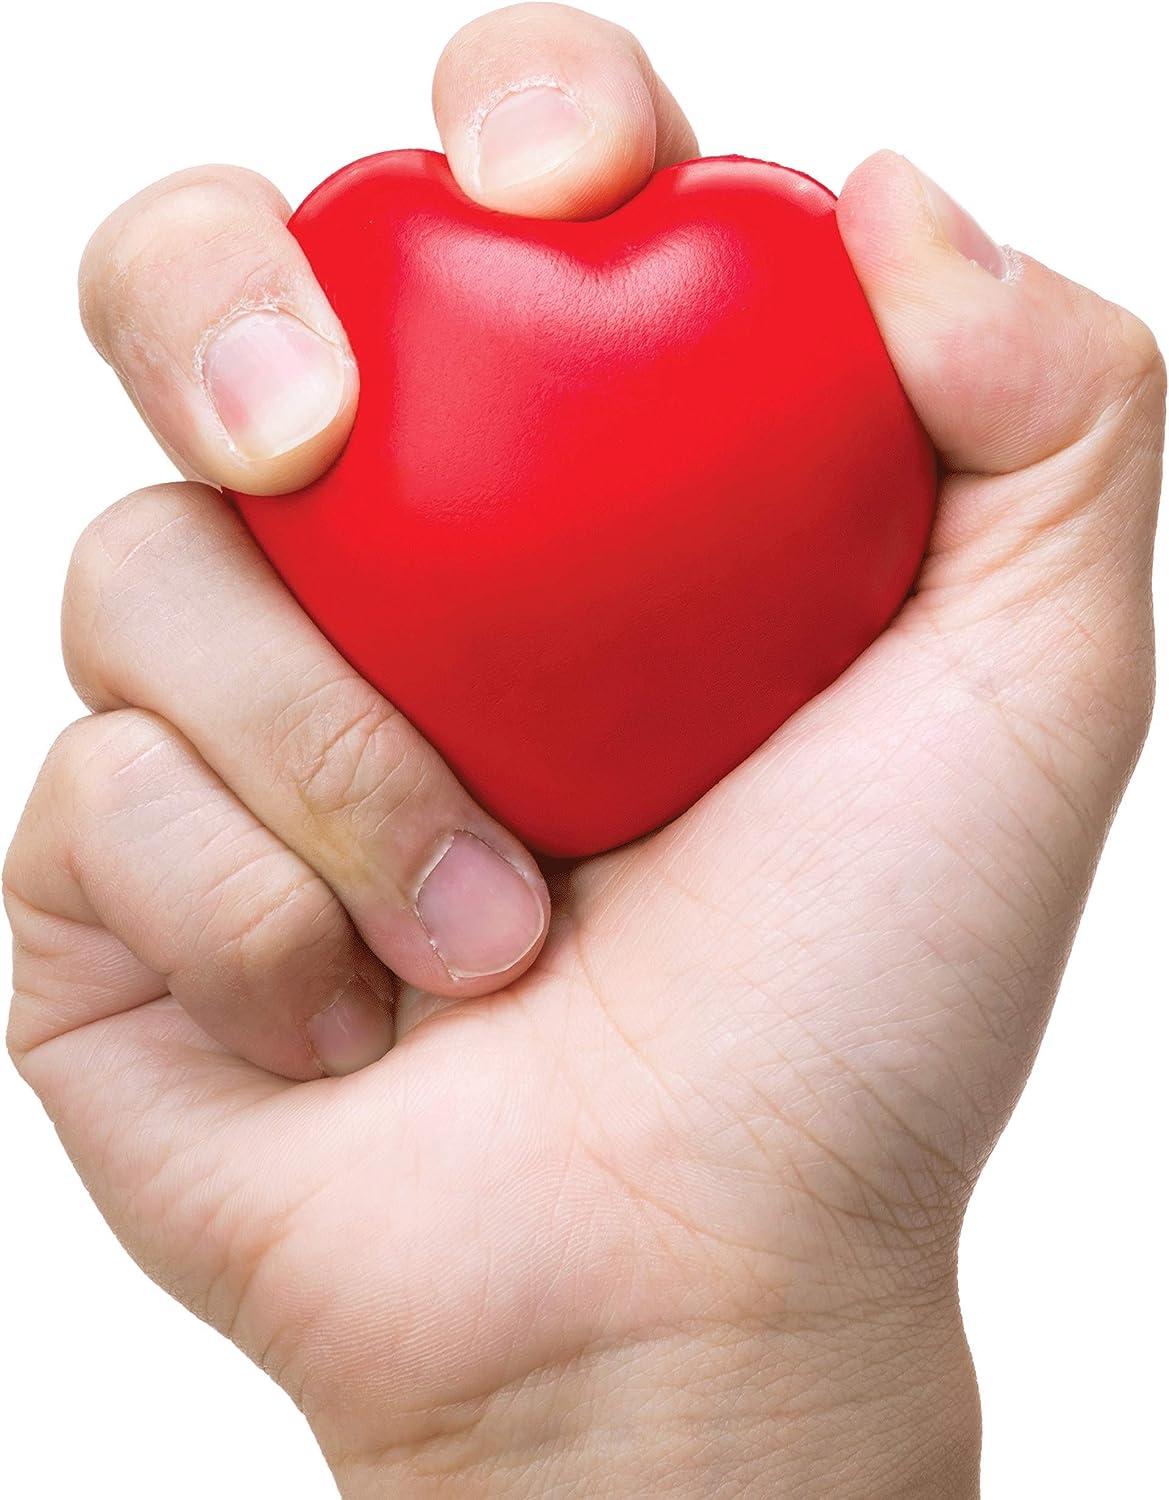 Firm Foam Heart Hand Exerciser 1 Count (Pack of 1) Heart